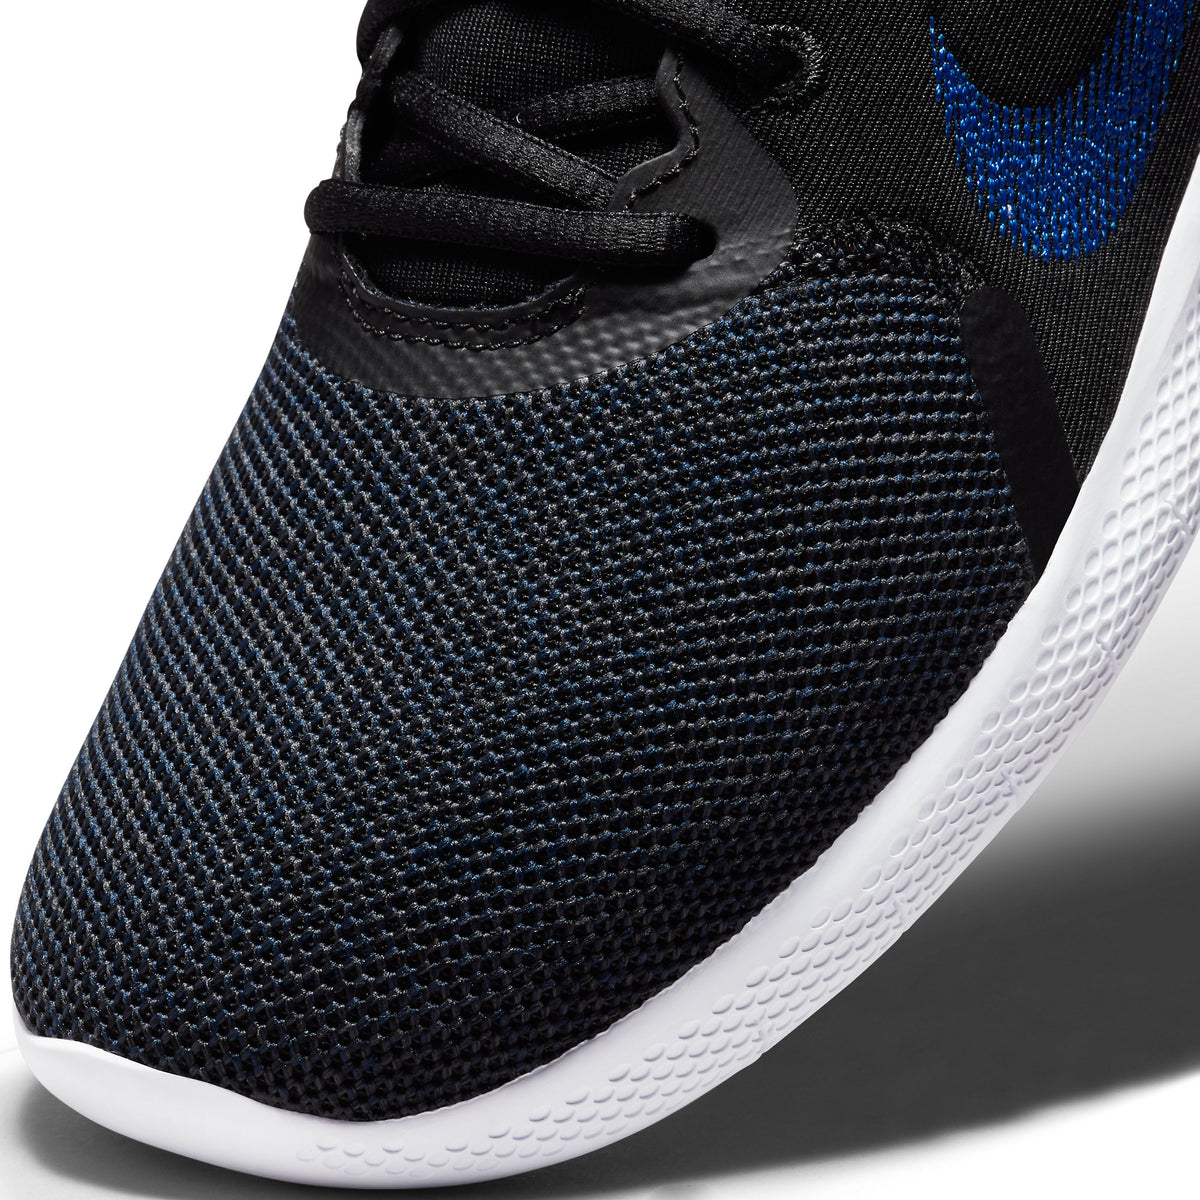 Zapatilla Nike Flex Experience RN 10 de Hombre color Negro / Azul